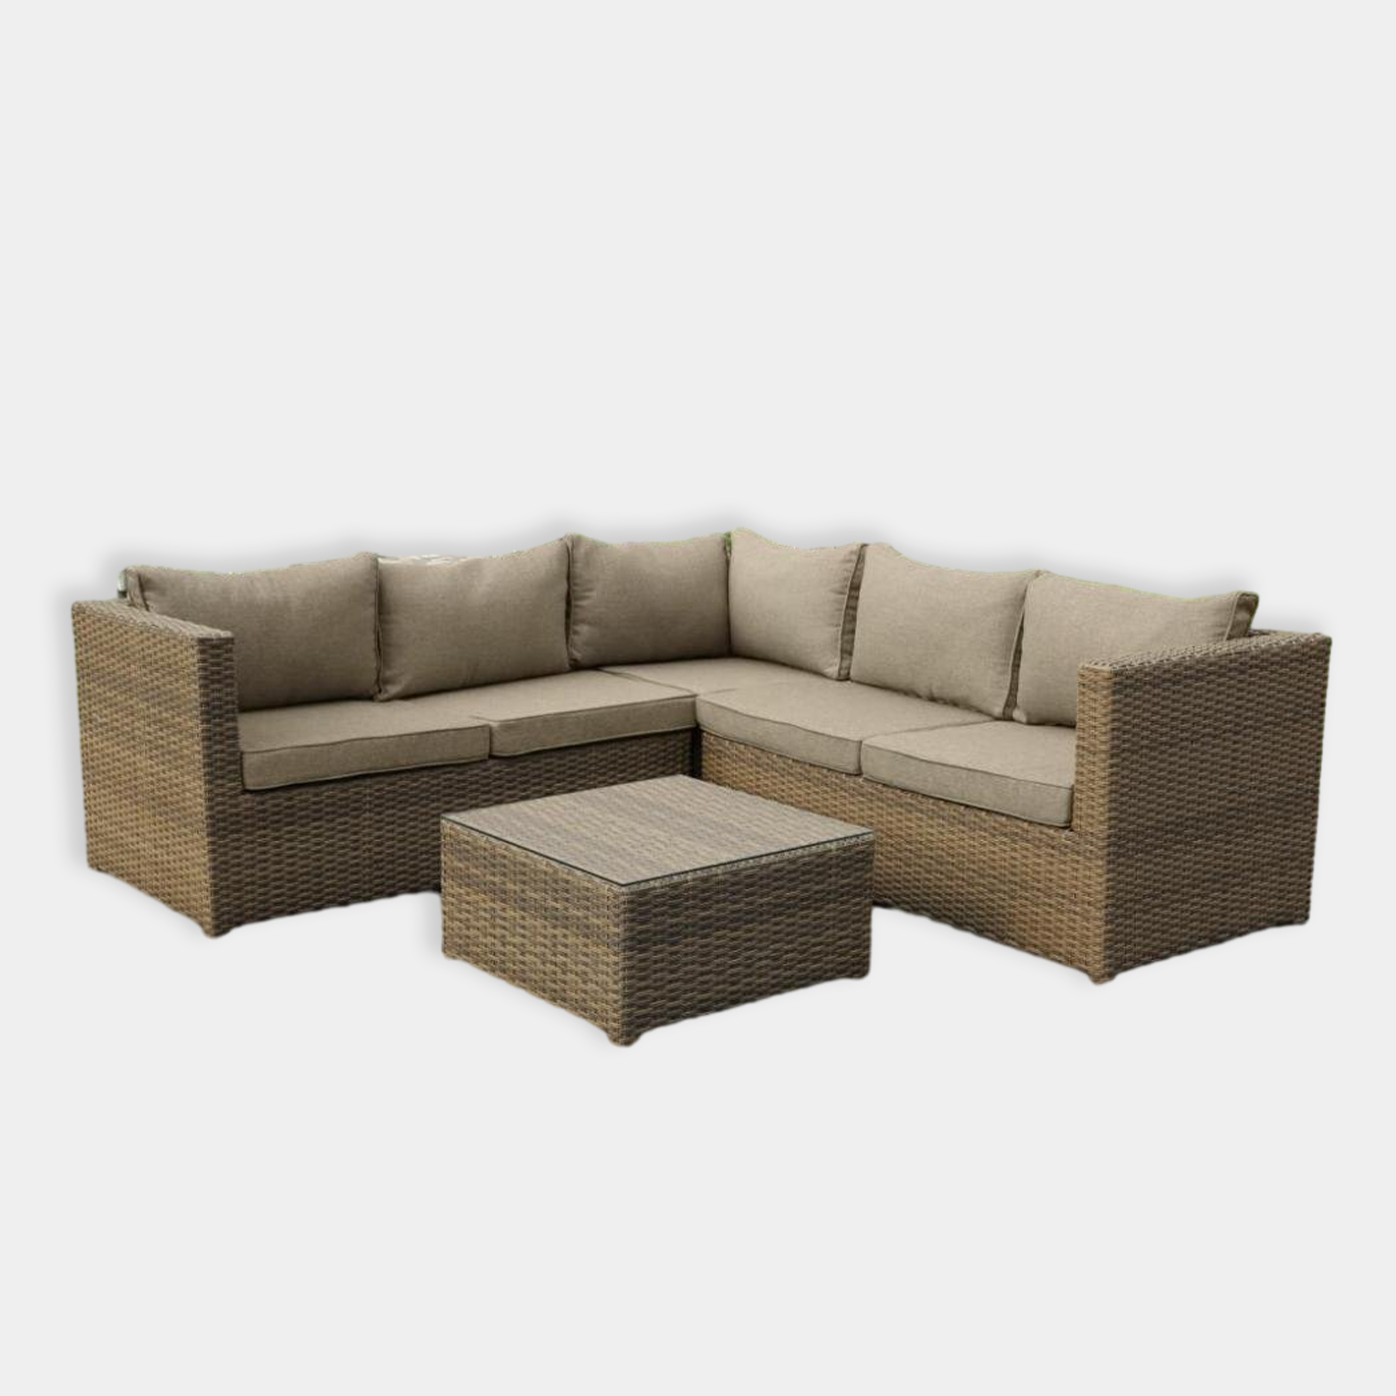 Комплект плетеной мебели YR825 (5 персон)